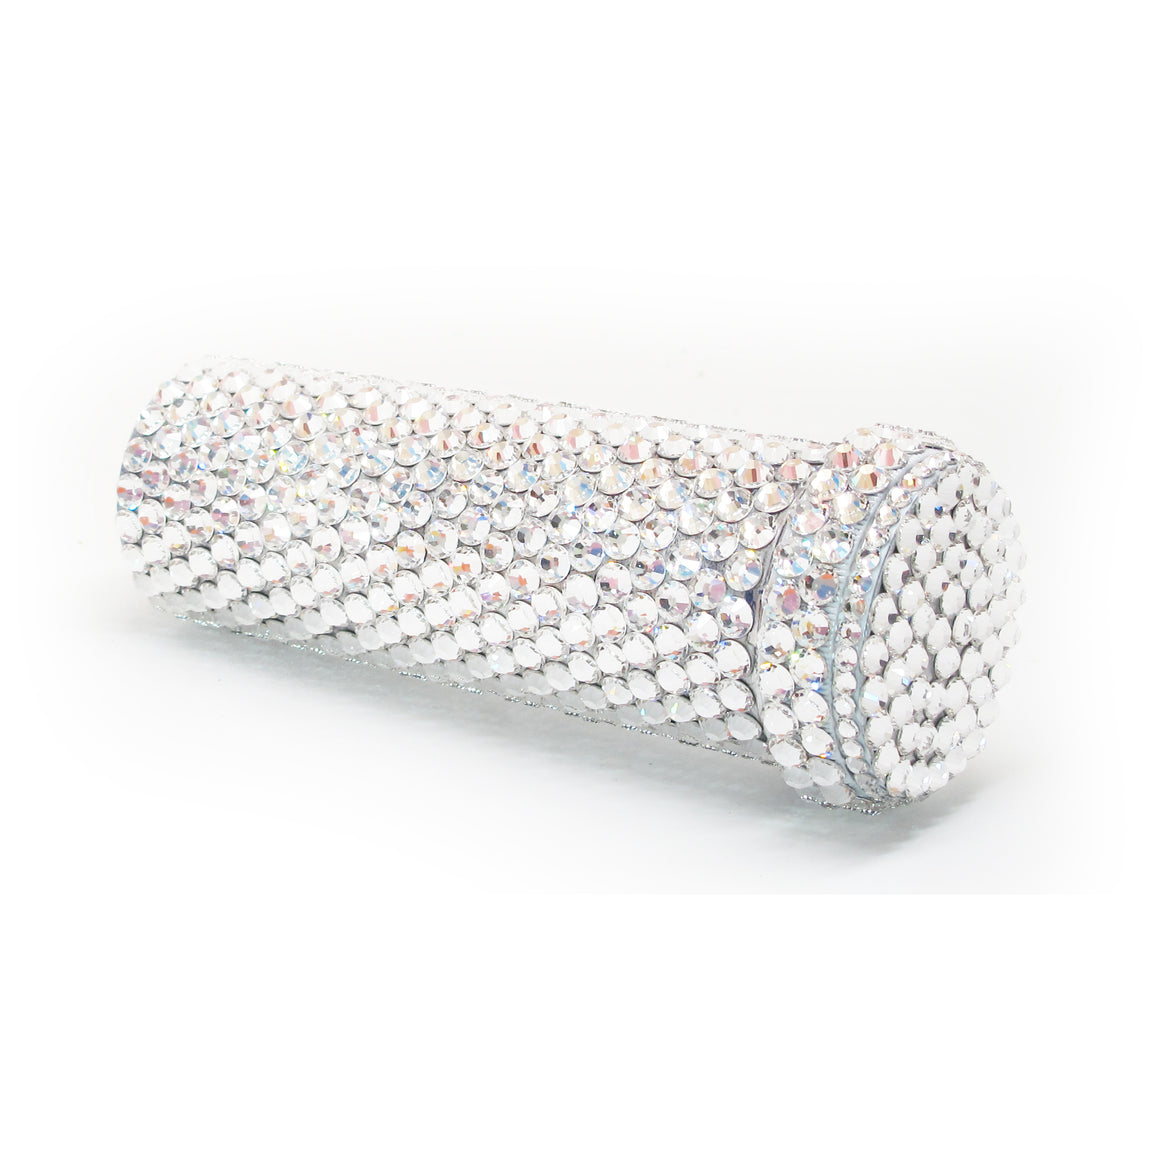 XL Crystal Pill Bottle - Diamante